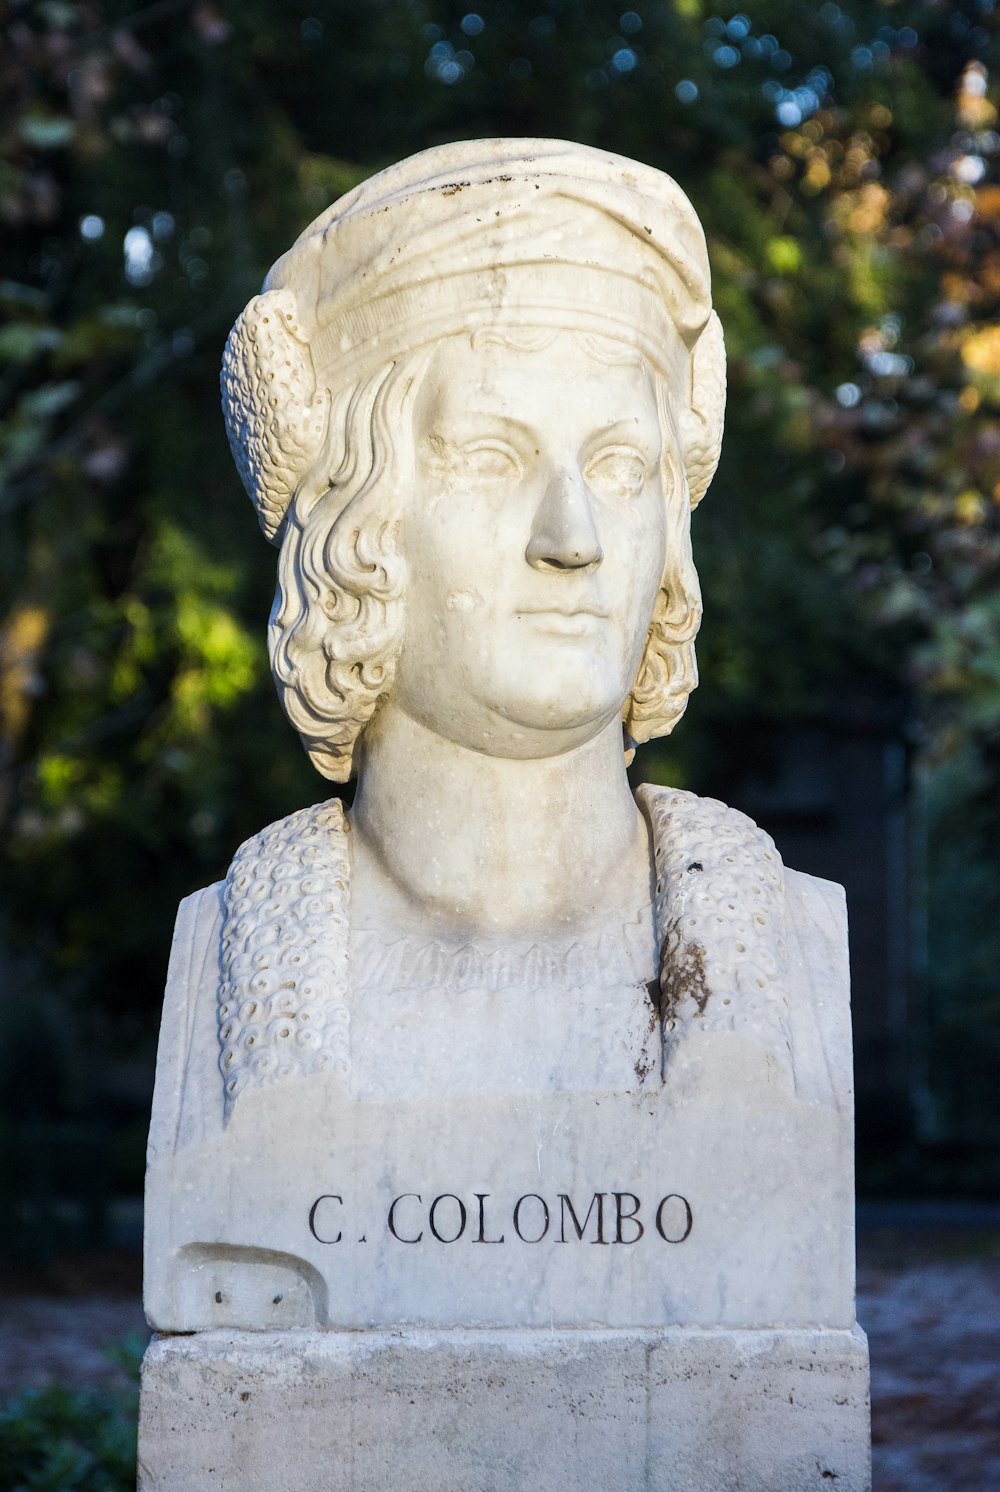 C. Busto en la cabeza de Colombo